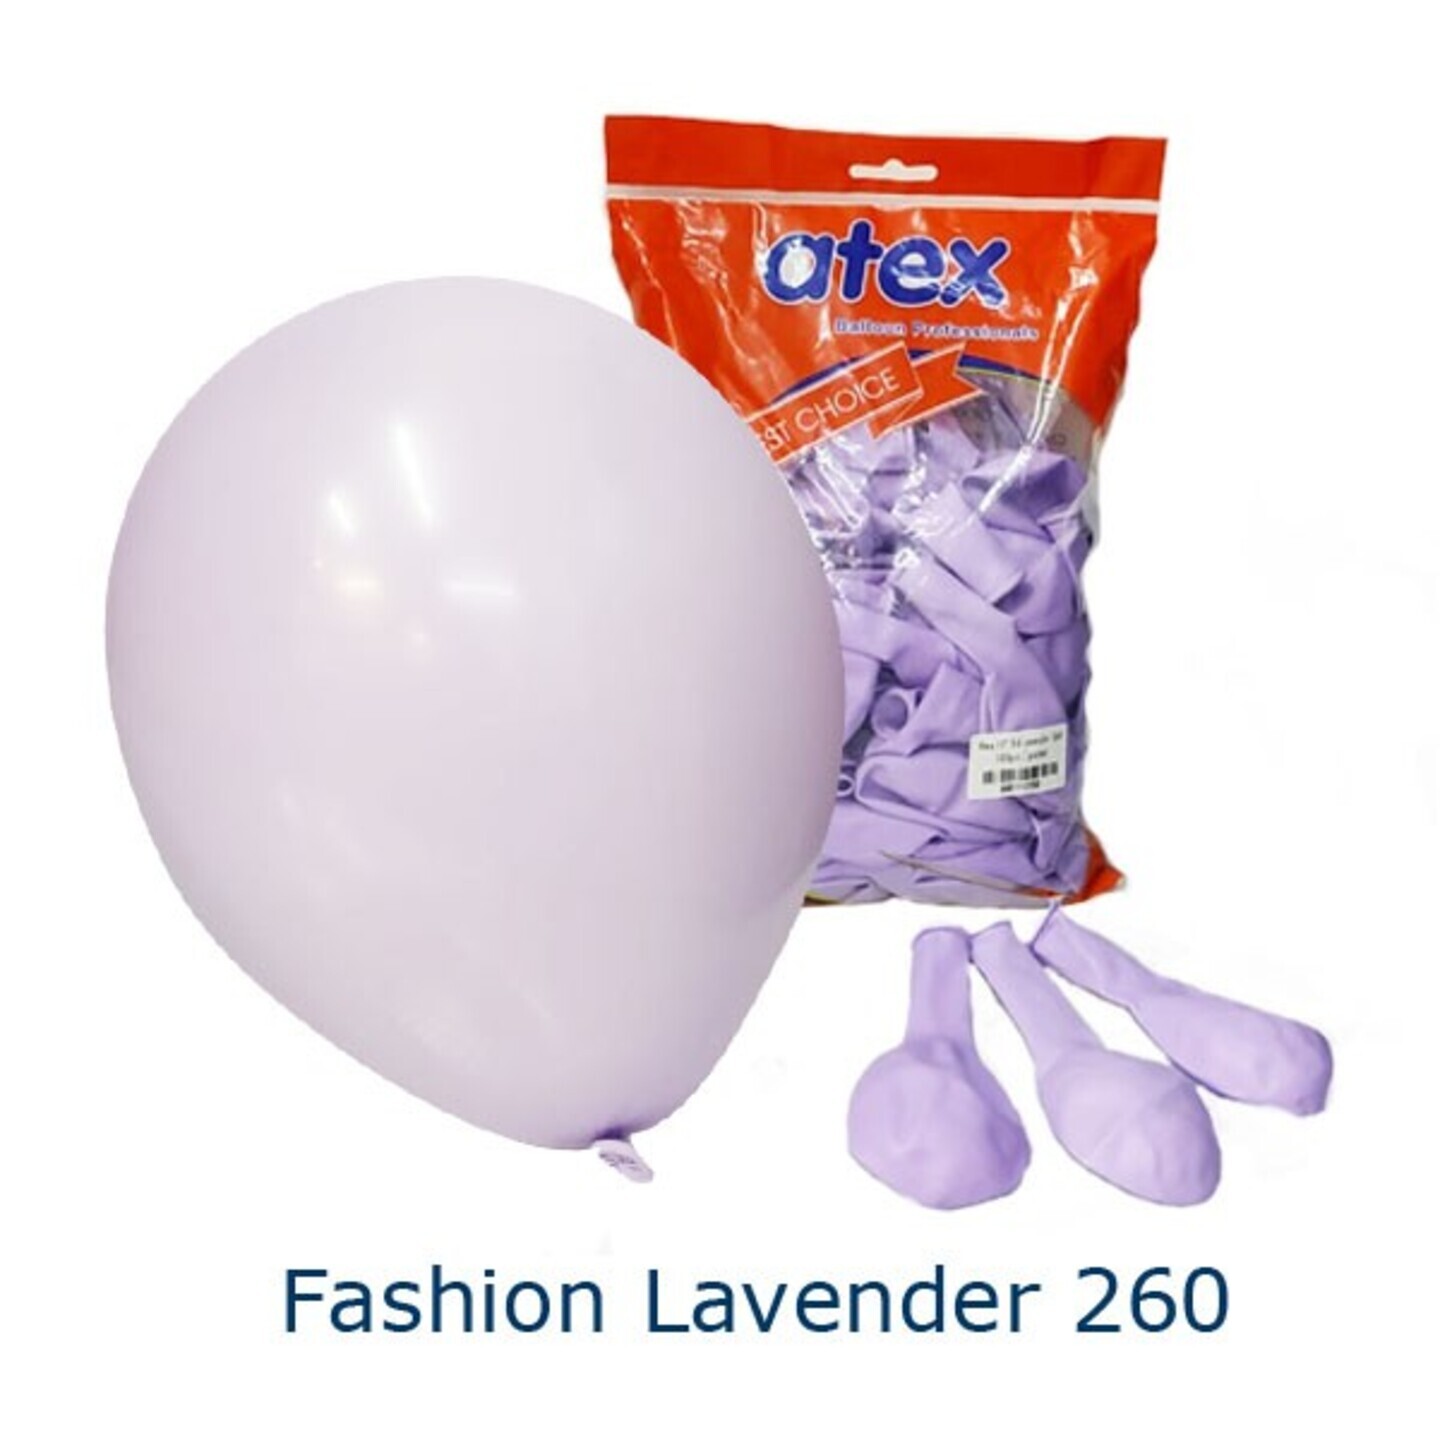 Fashion Lavender 260